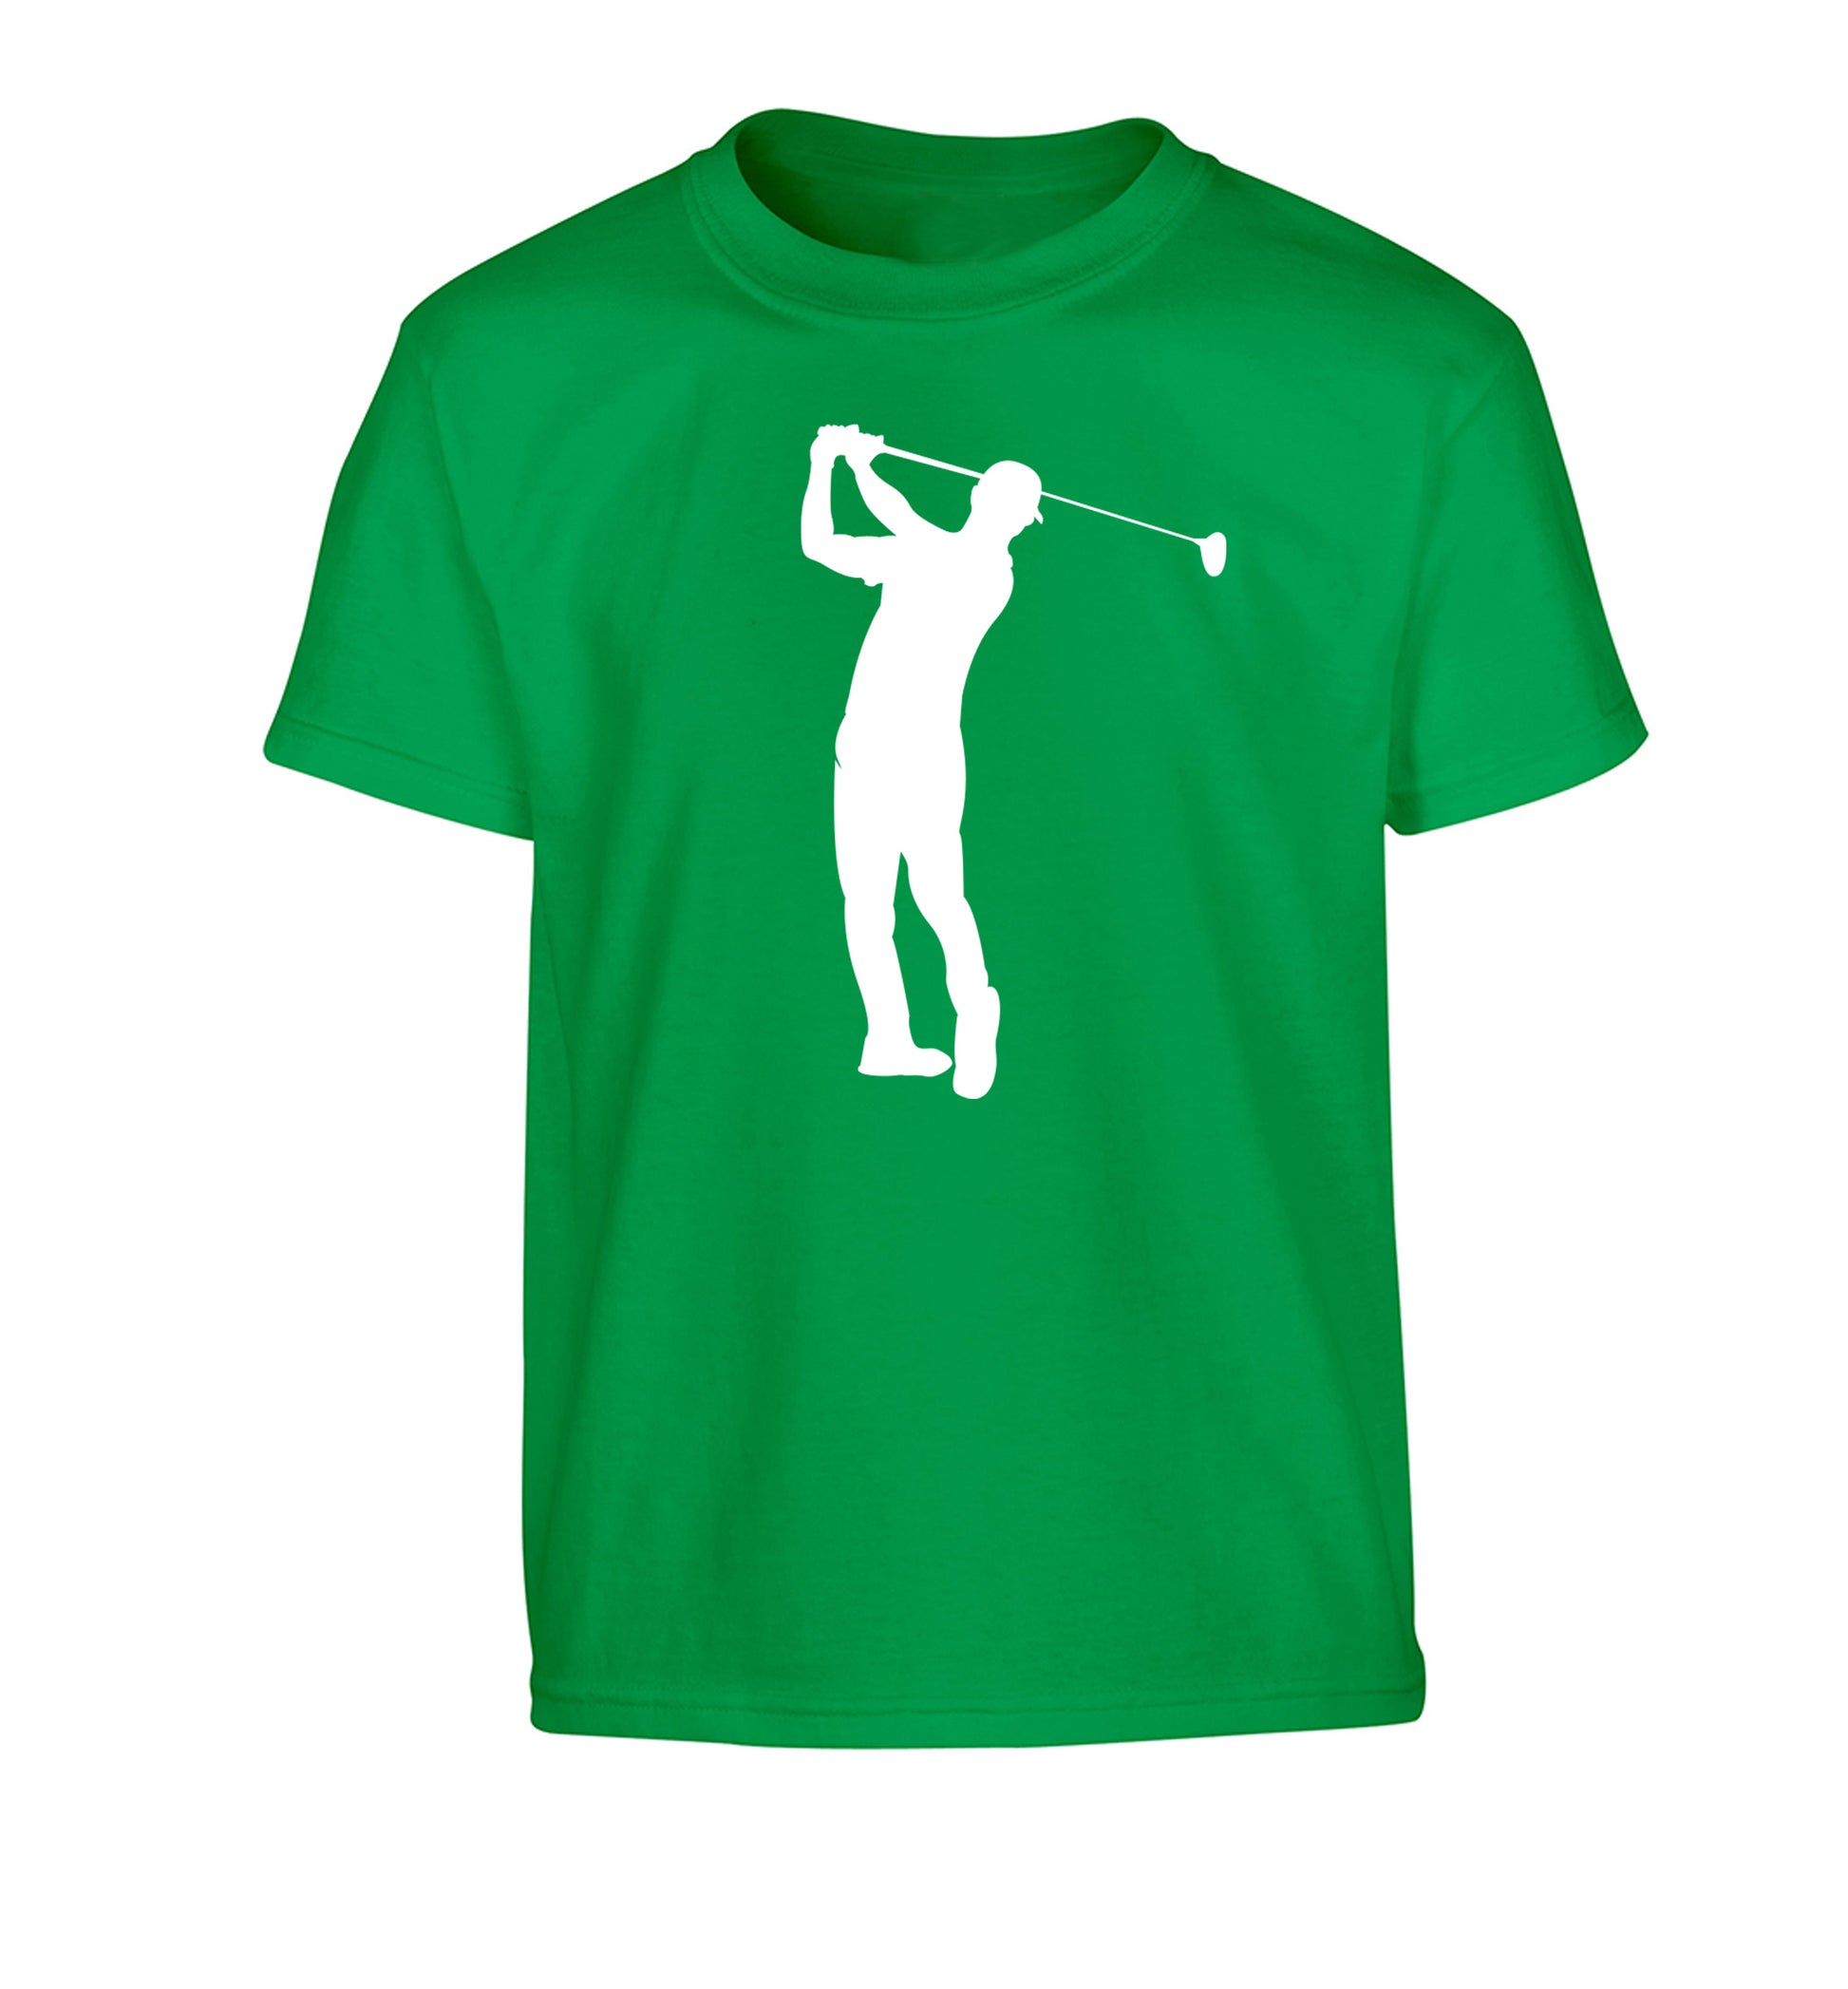 Golfer Illustration Children's green Tshirt 12-13 Years